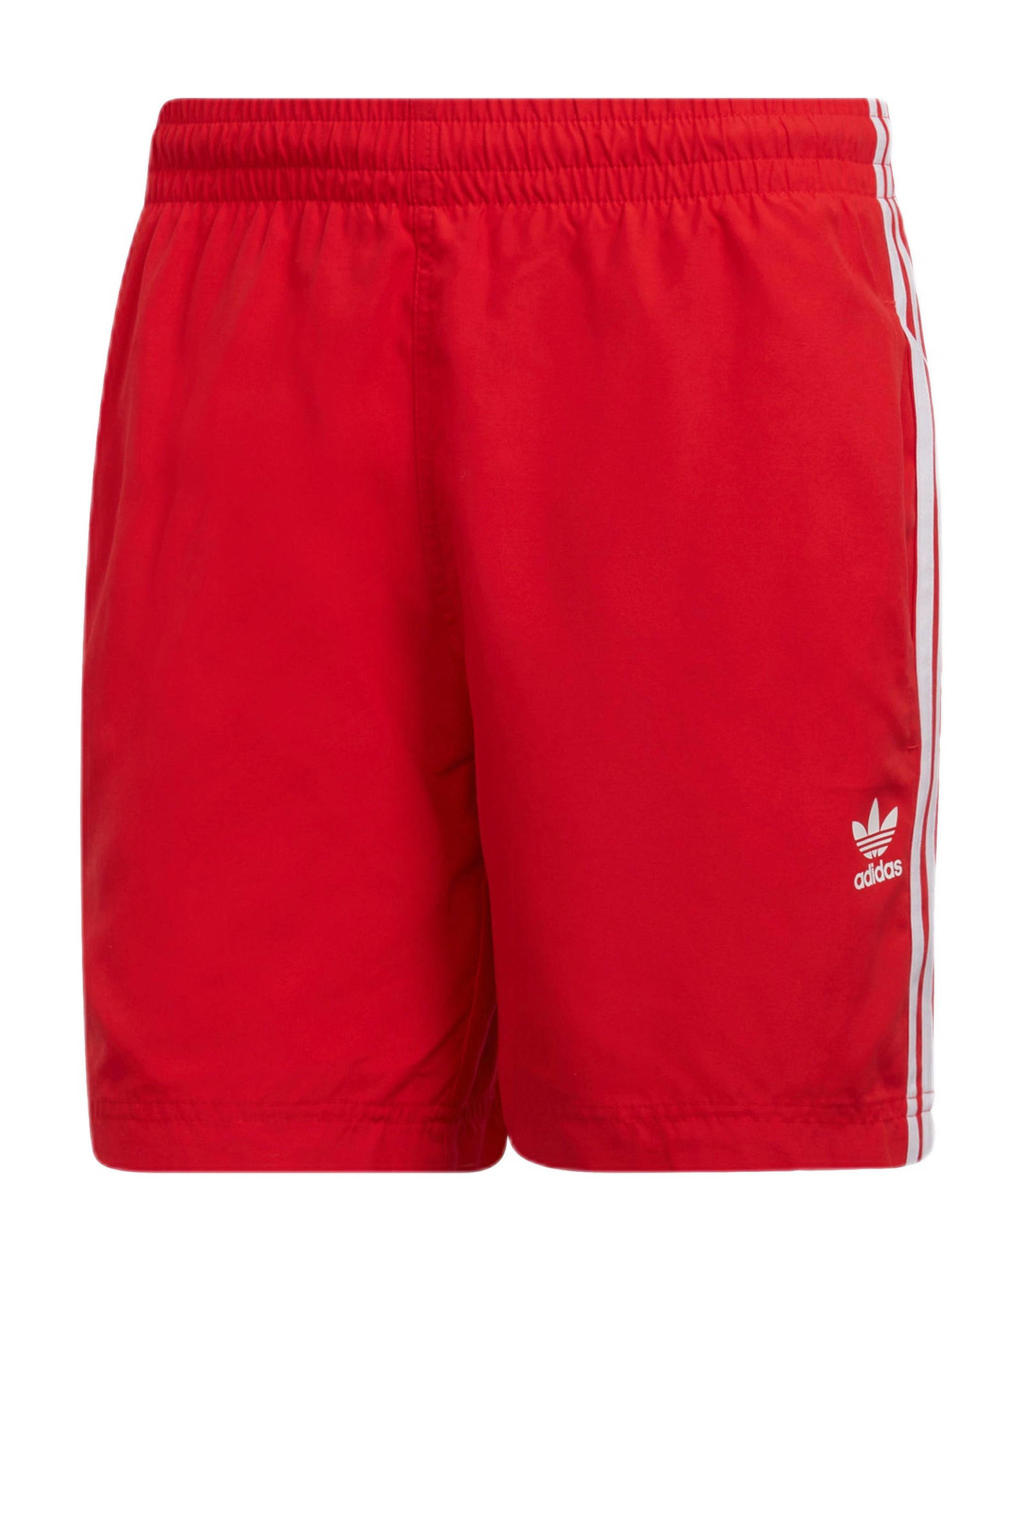 adidas Originals Adicolor zwemshort rood